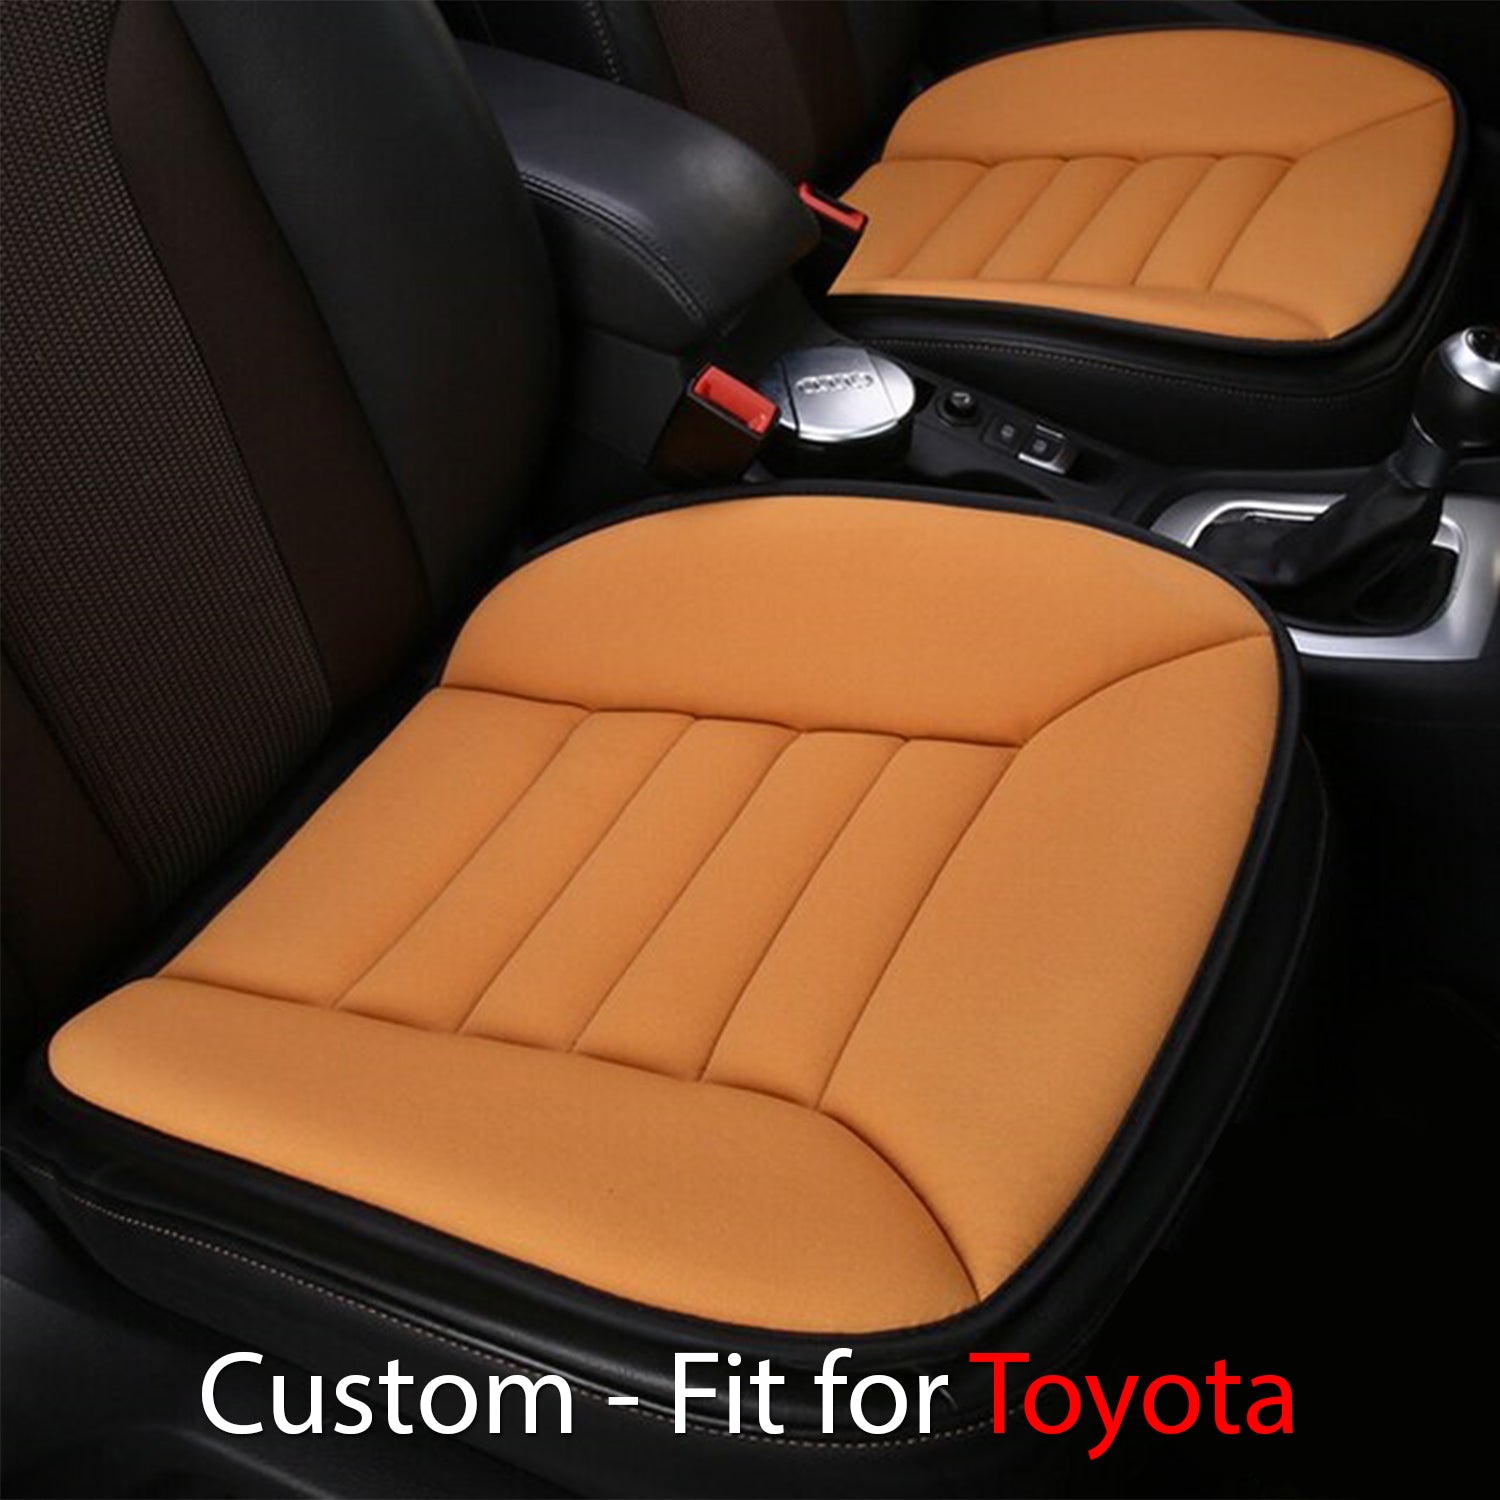 Car Seat Cushion with 1.2inch Comfort Memory Foam, Custom-Fit For Car, Seat Cushion for Car and Office Chair DLPF247